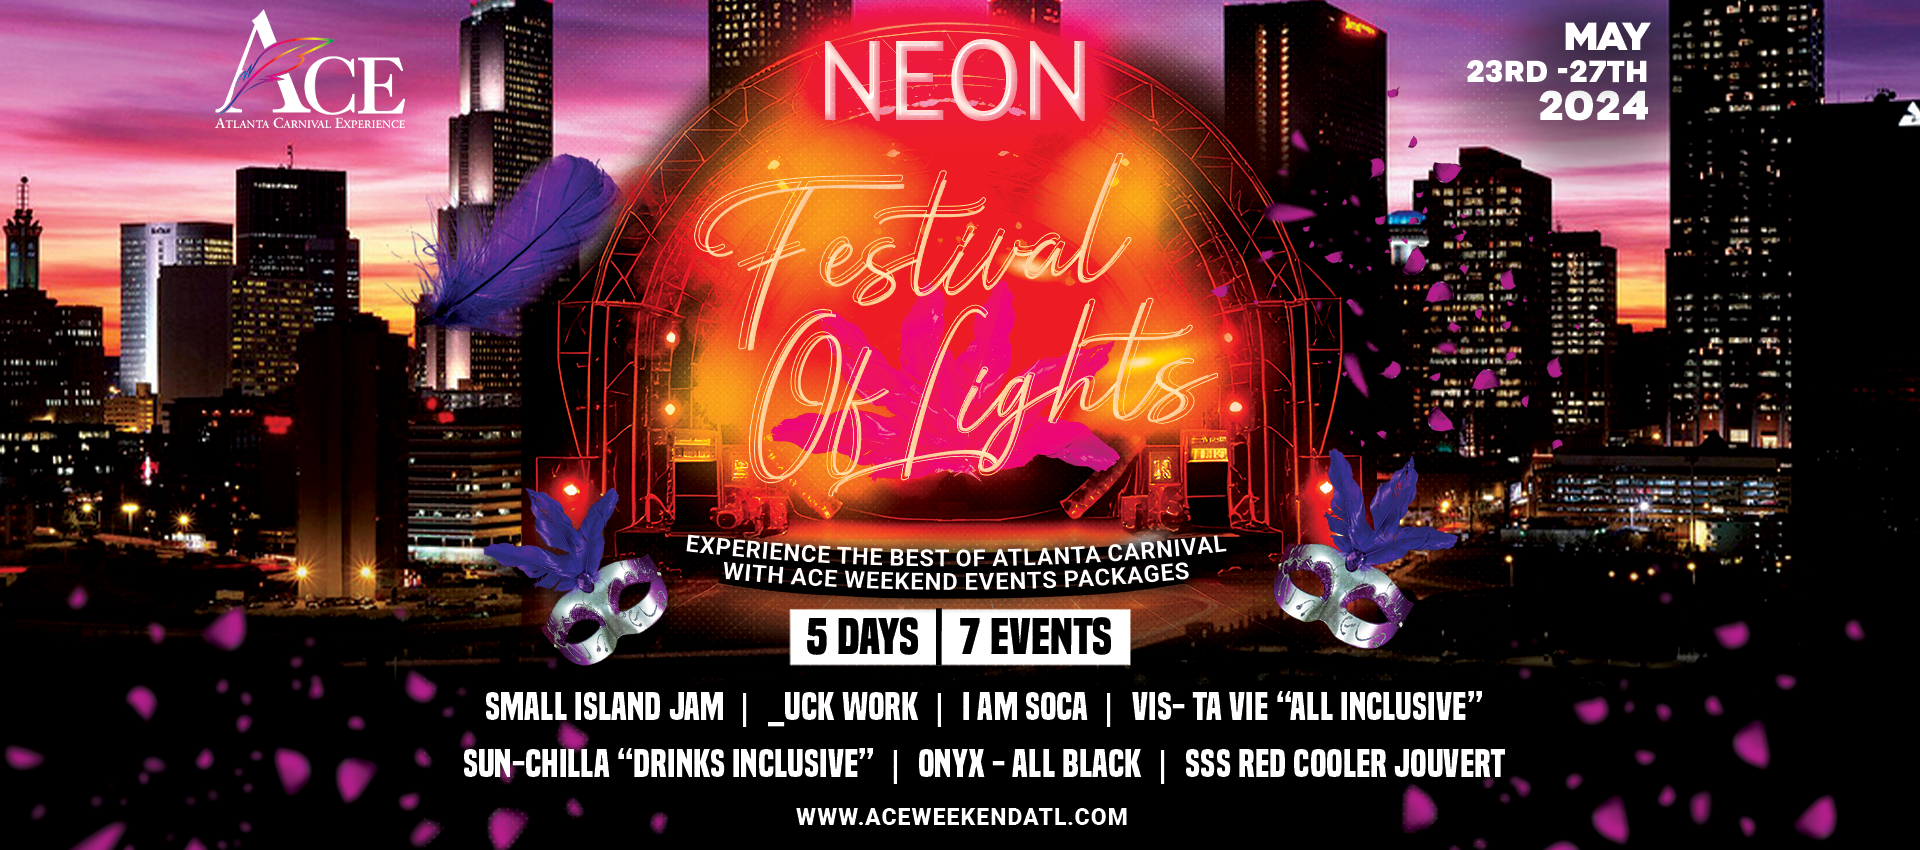 Ace Festival Of Lights Neon 1920 x 850